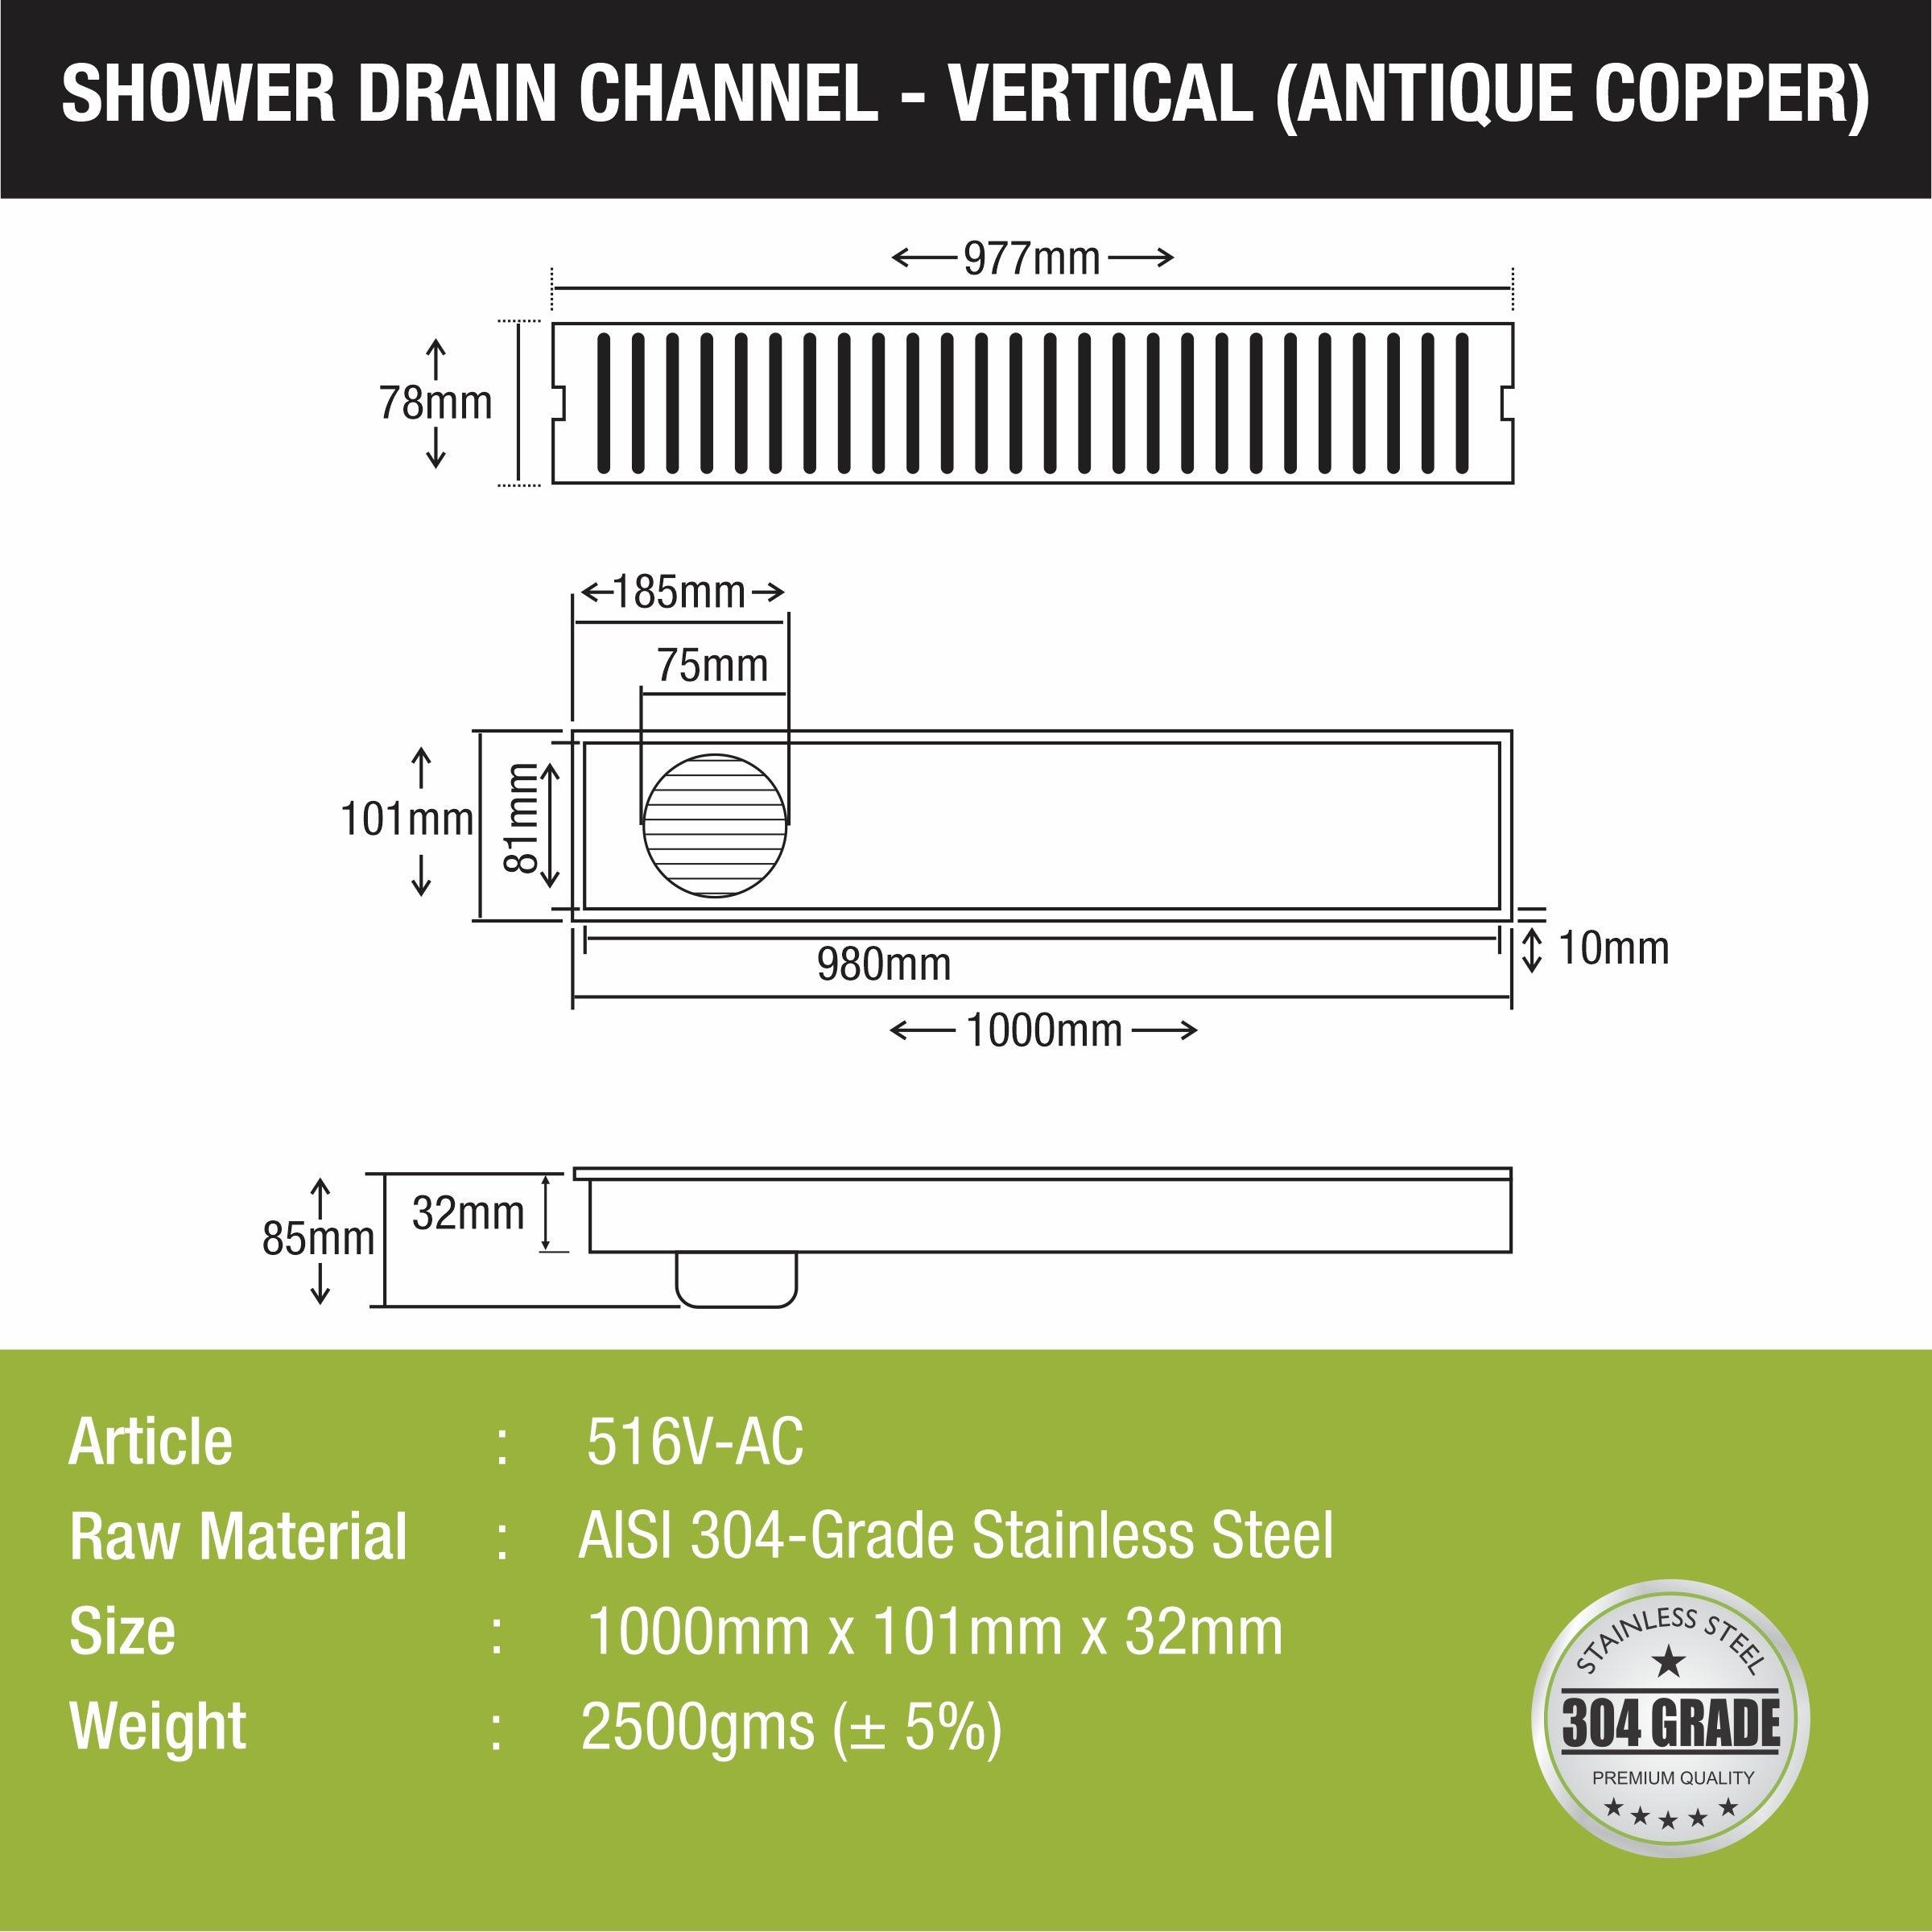 Vertical Shower Drain Channel - Antique Copper (40 x 4 Inches) - LIPKA - Lipka Home